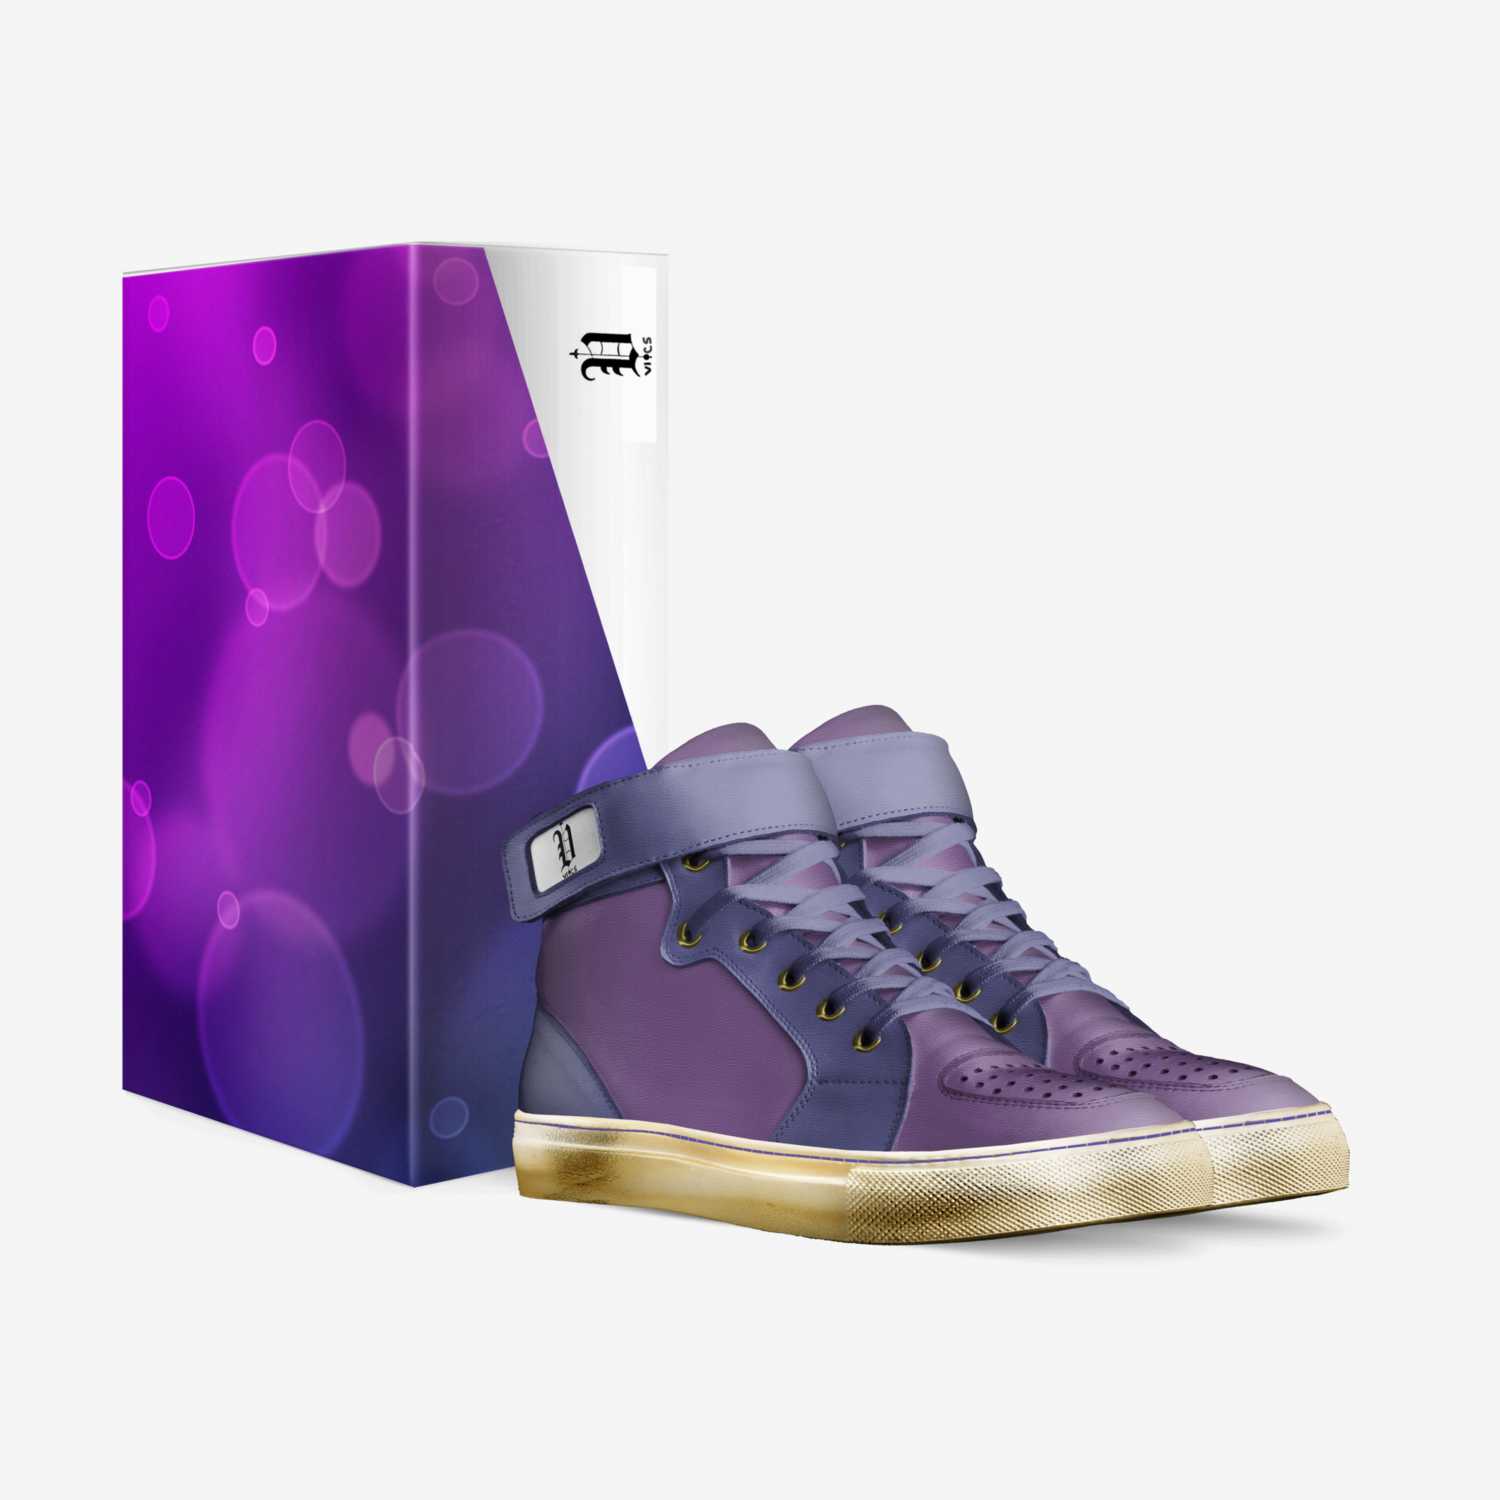 vics purple rain custom made in Italy shoes by Brayden Murphy | Box view